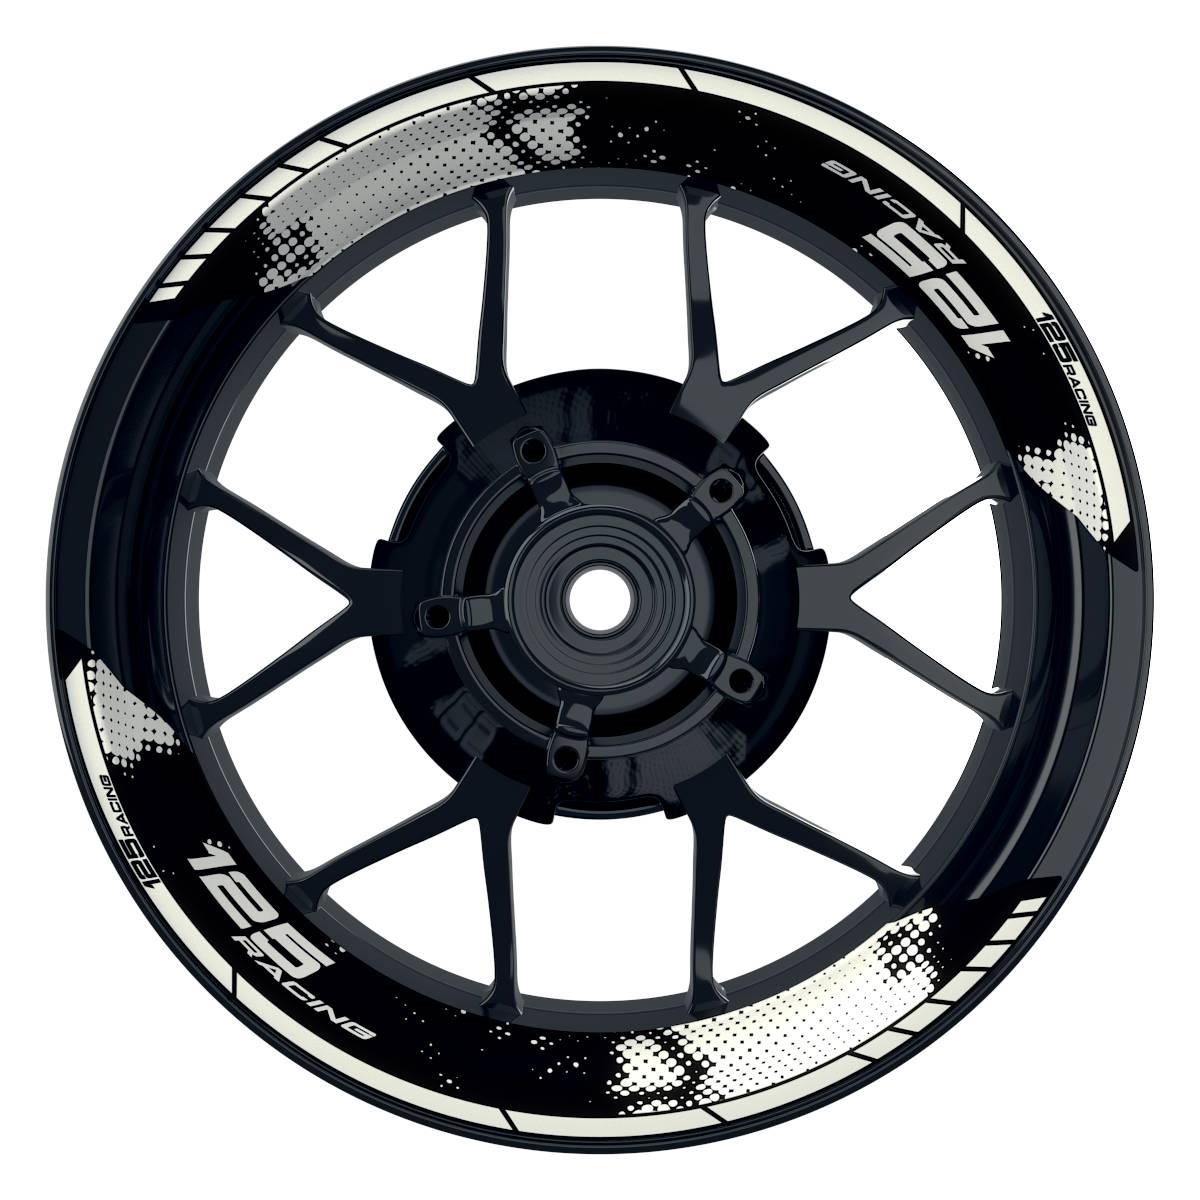 KTM Racing 125 Dots schwarz weiss Frontansicht